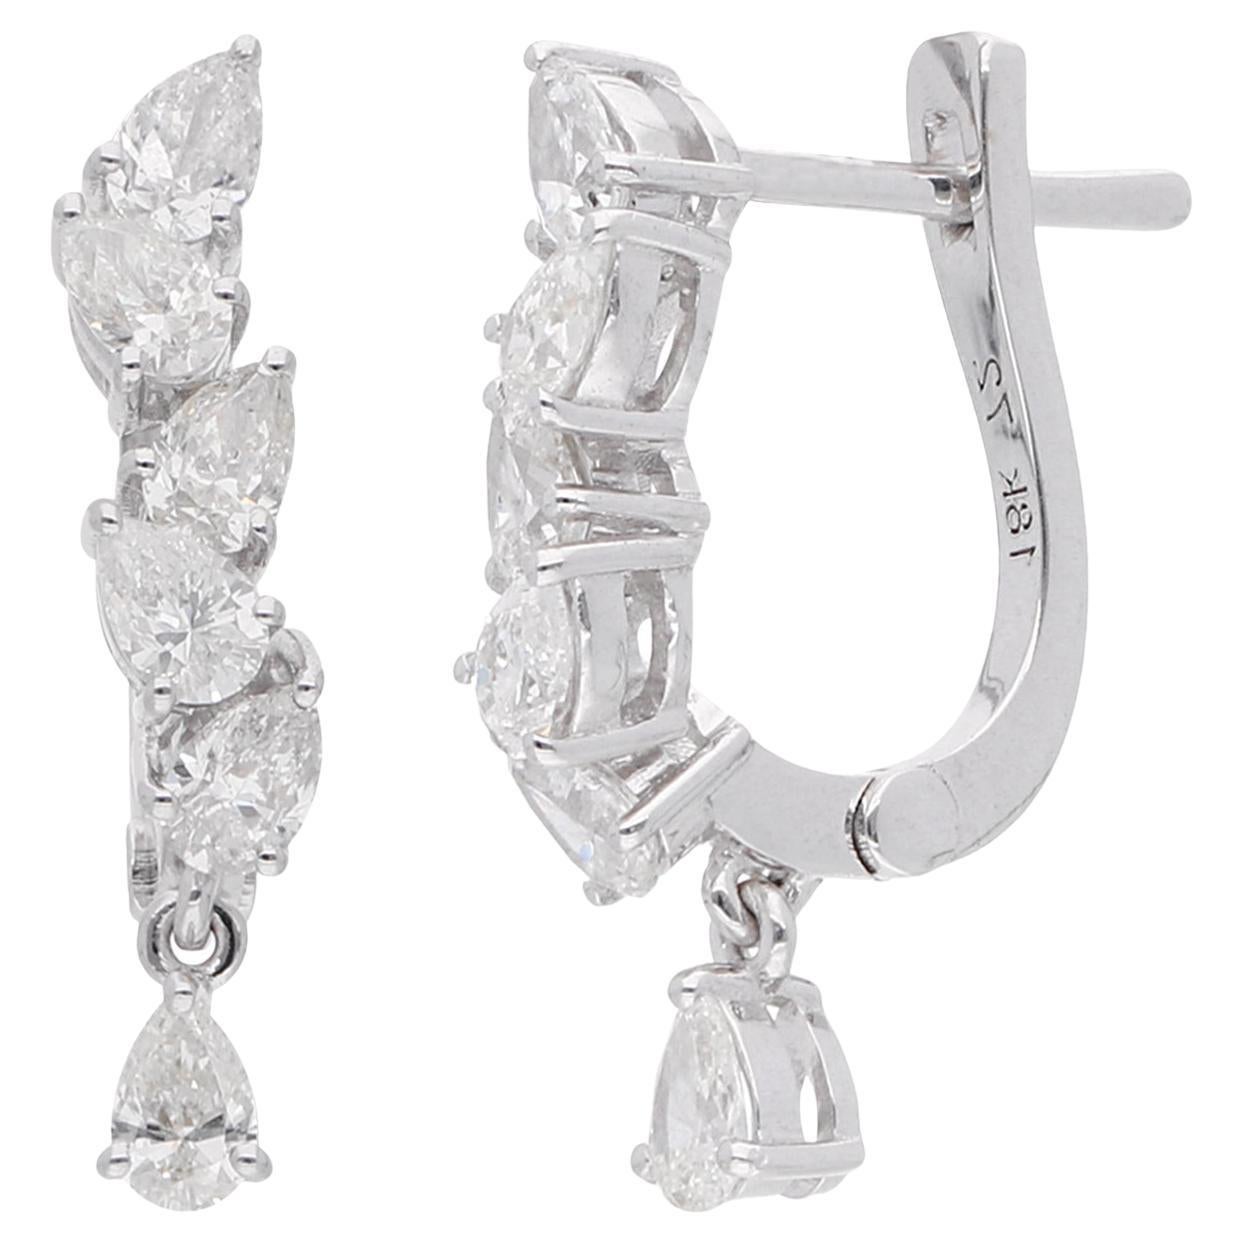 1 Carat Pear Shape Diamond Hoop Earrings 14 Karat White Gold Handmade Jewelry (Boucles d'oreilles en or blanc 14 carats avec diamants)